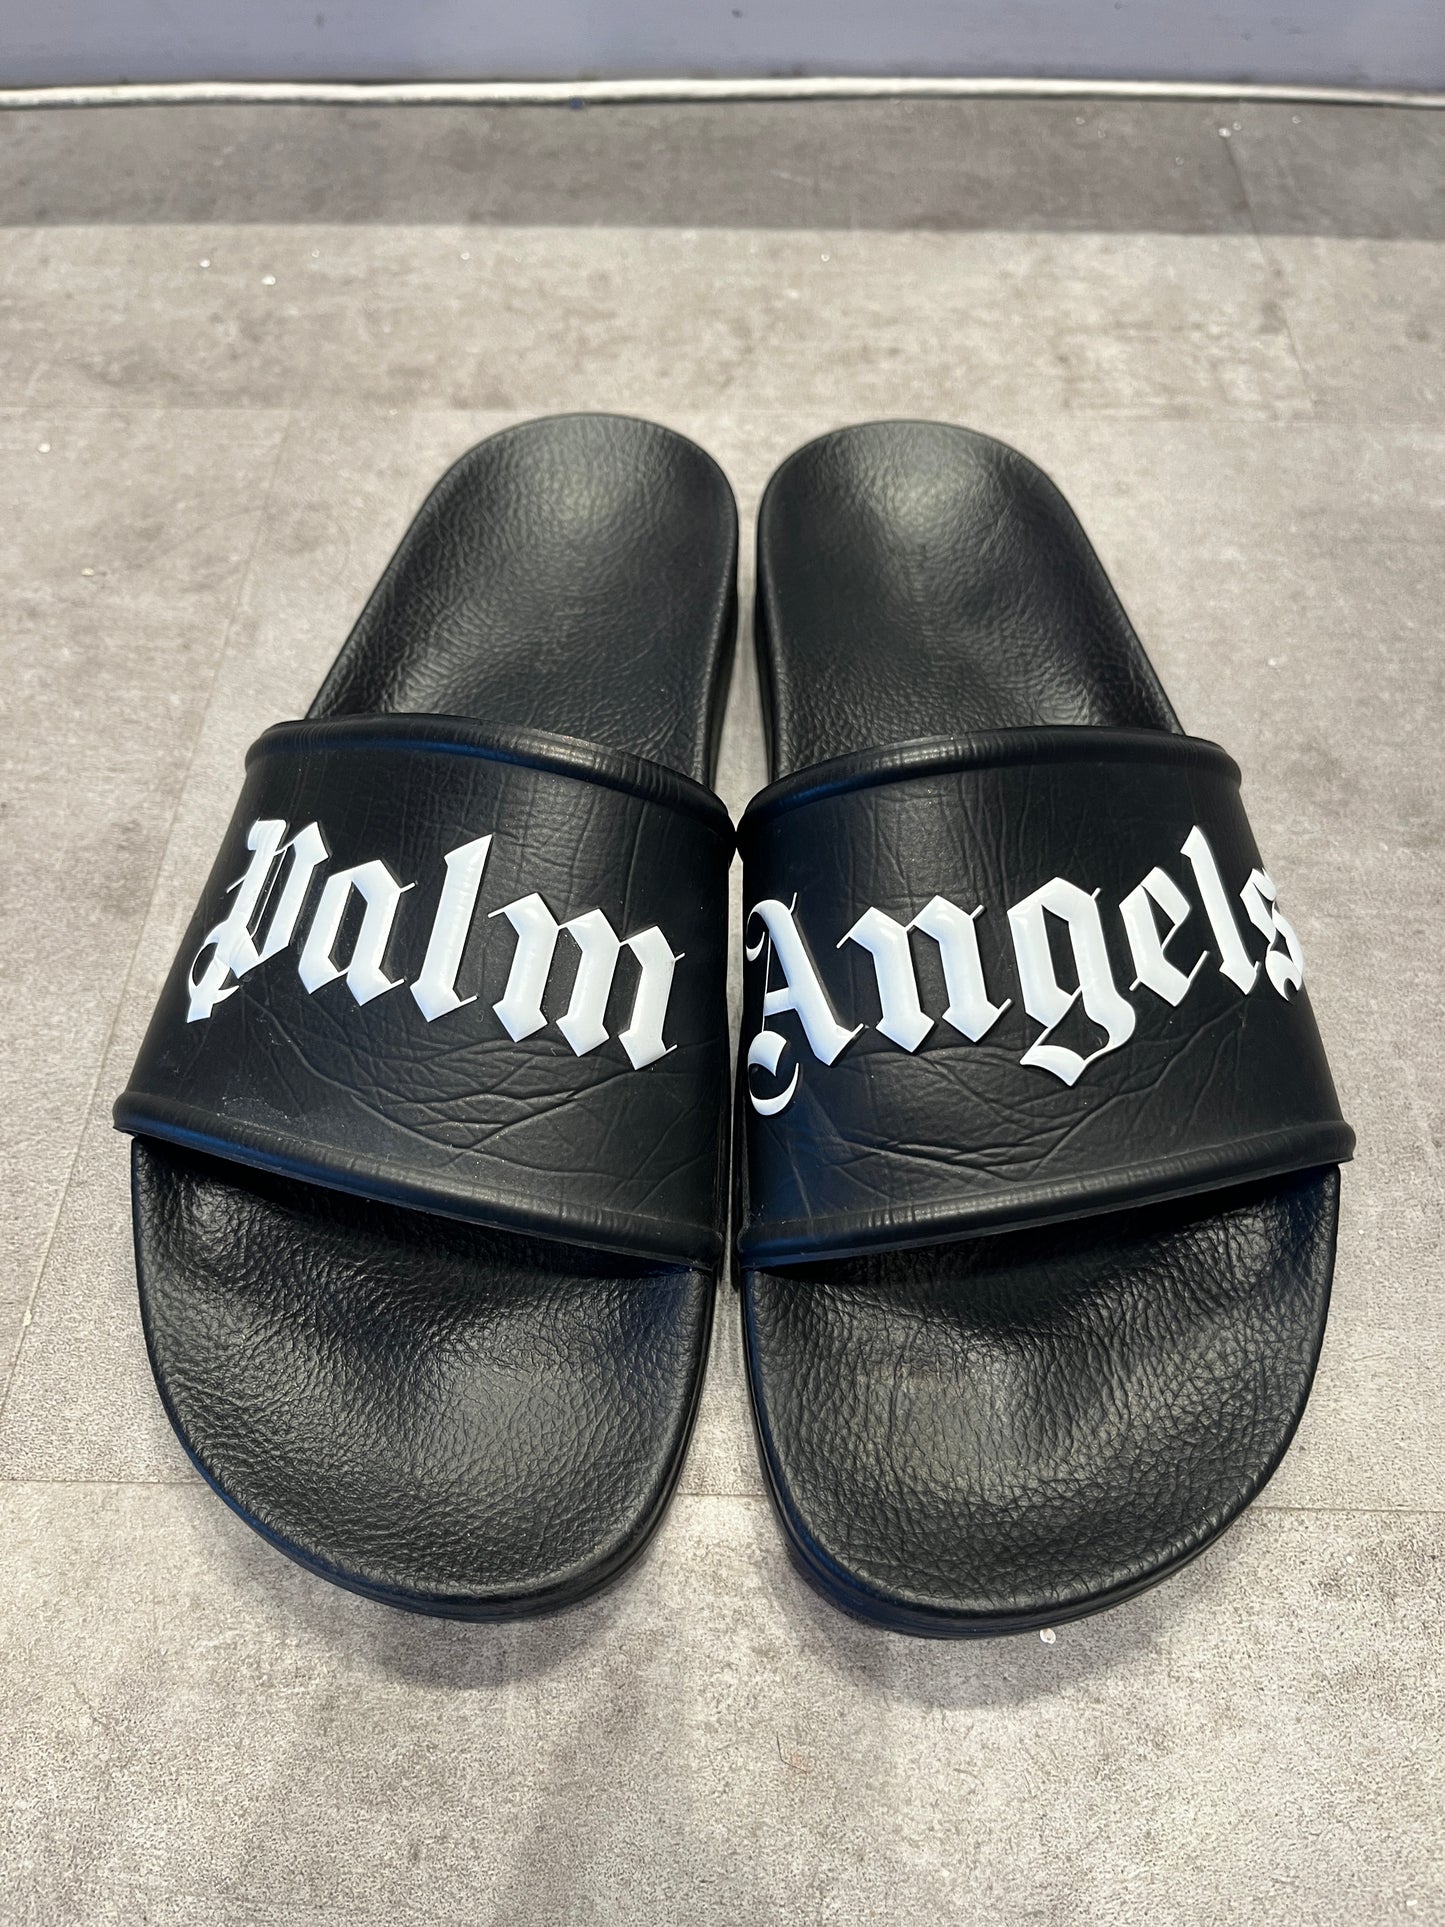 Palm Angels Pool Slides Black (Preowned)